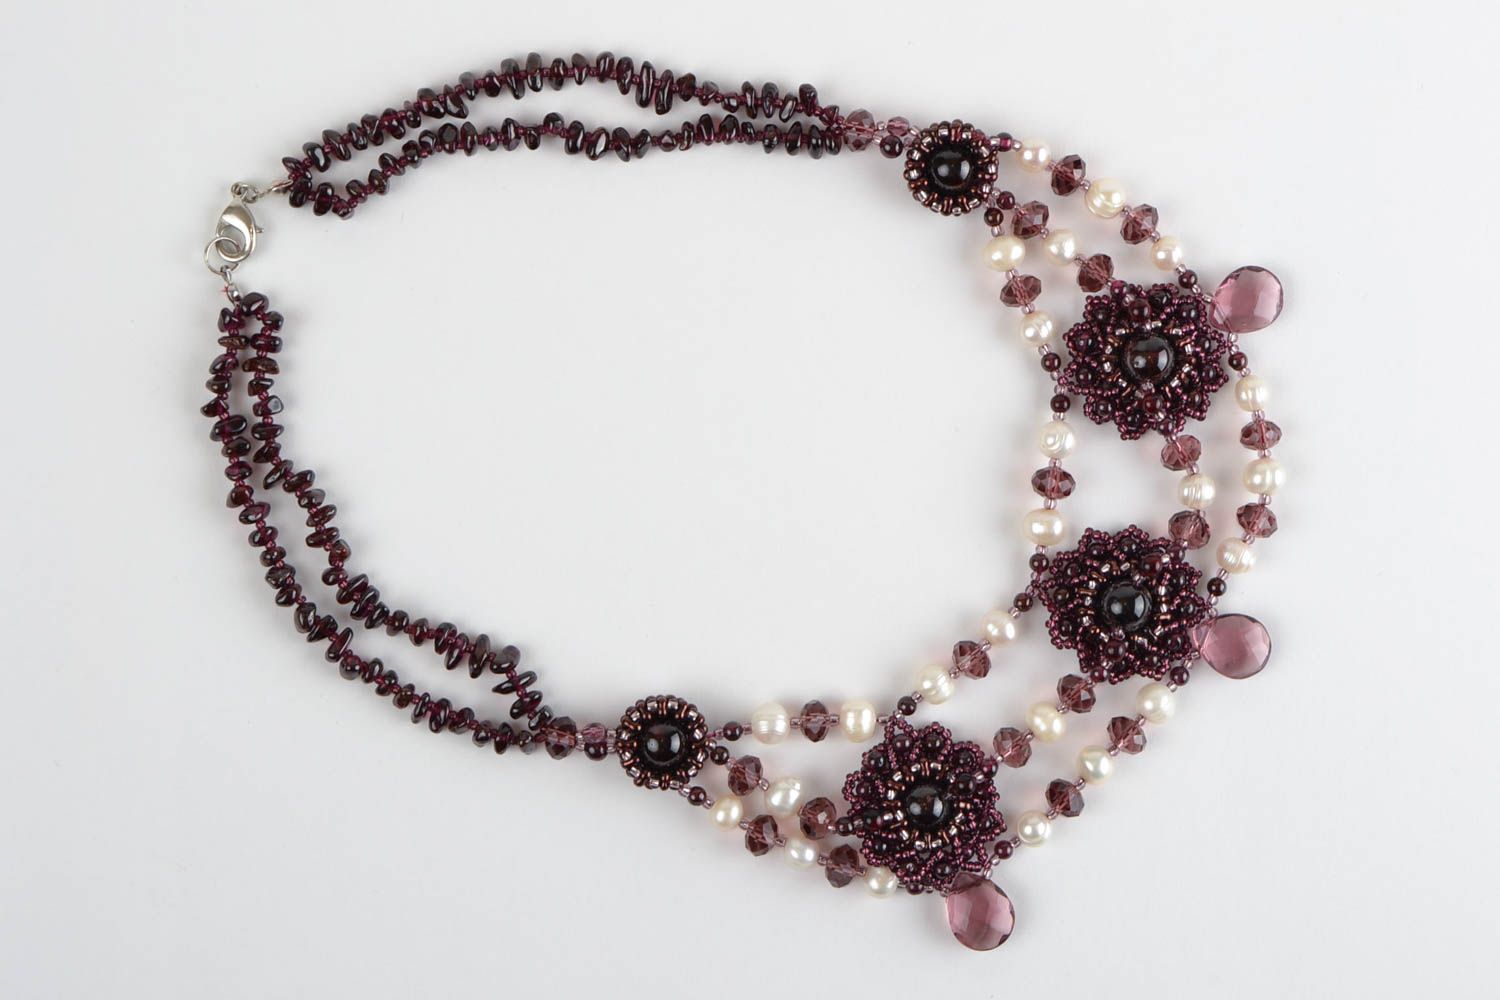 Handmade dark woven volume beaded women's designer necklace with natural stones photo 2